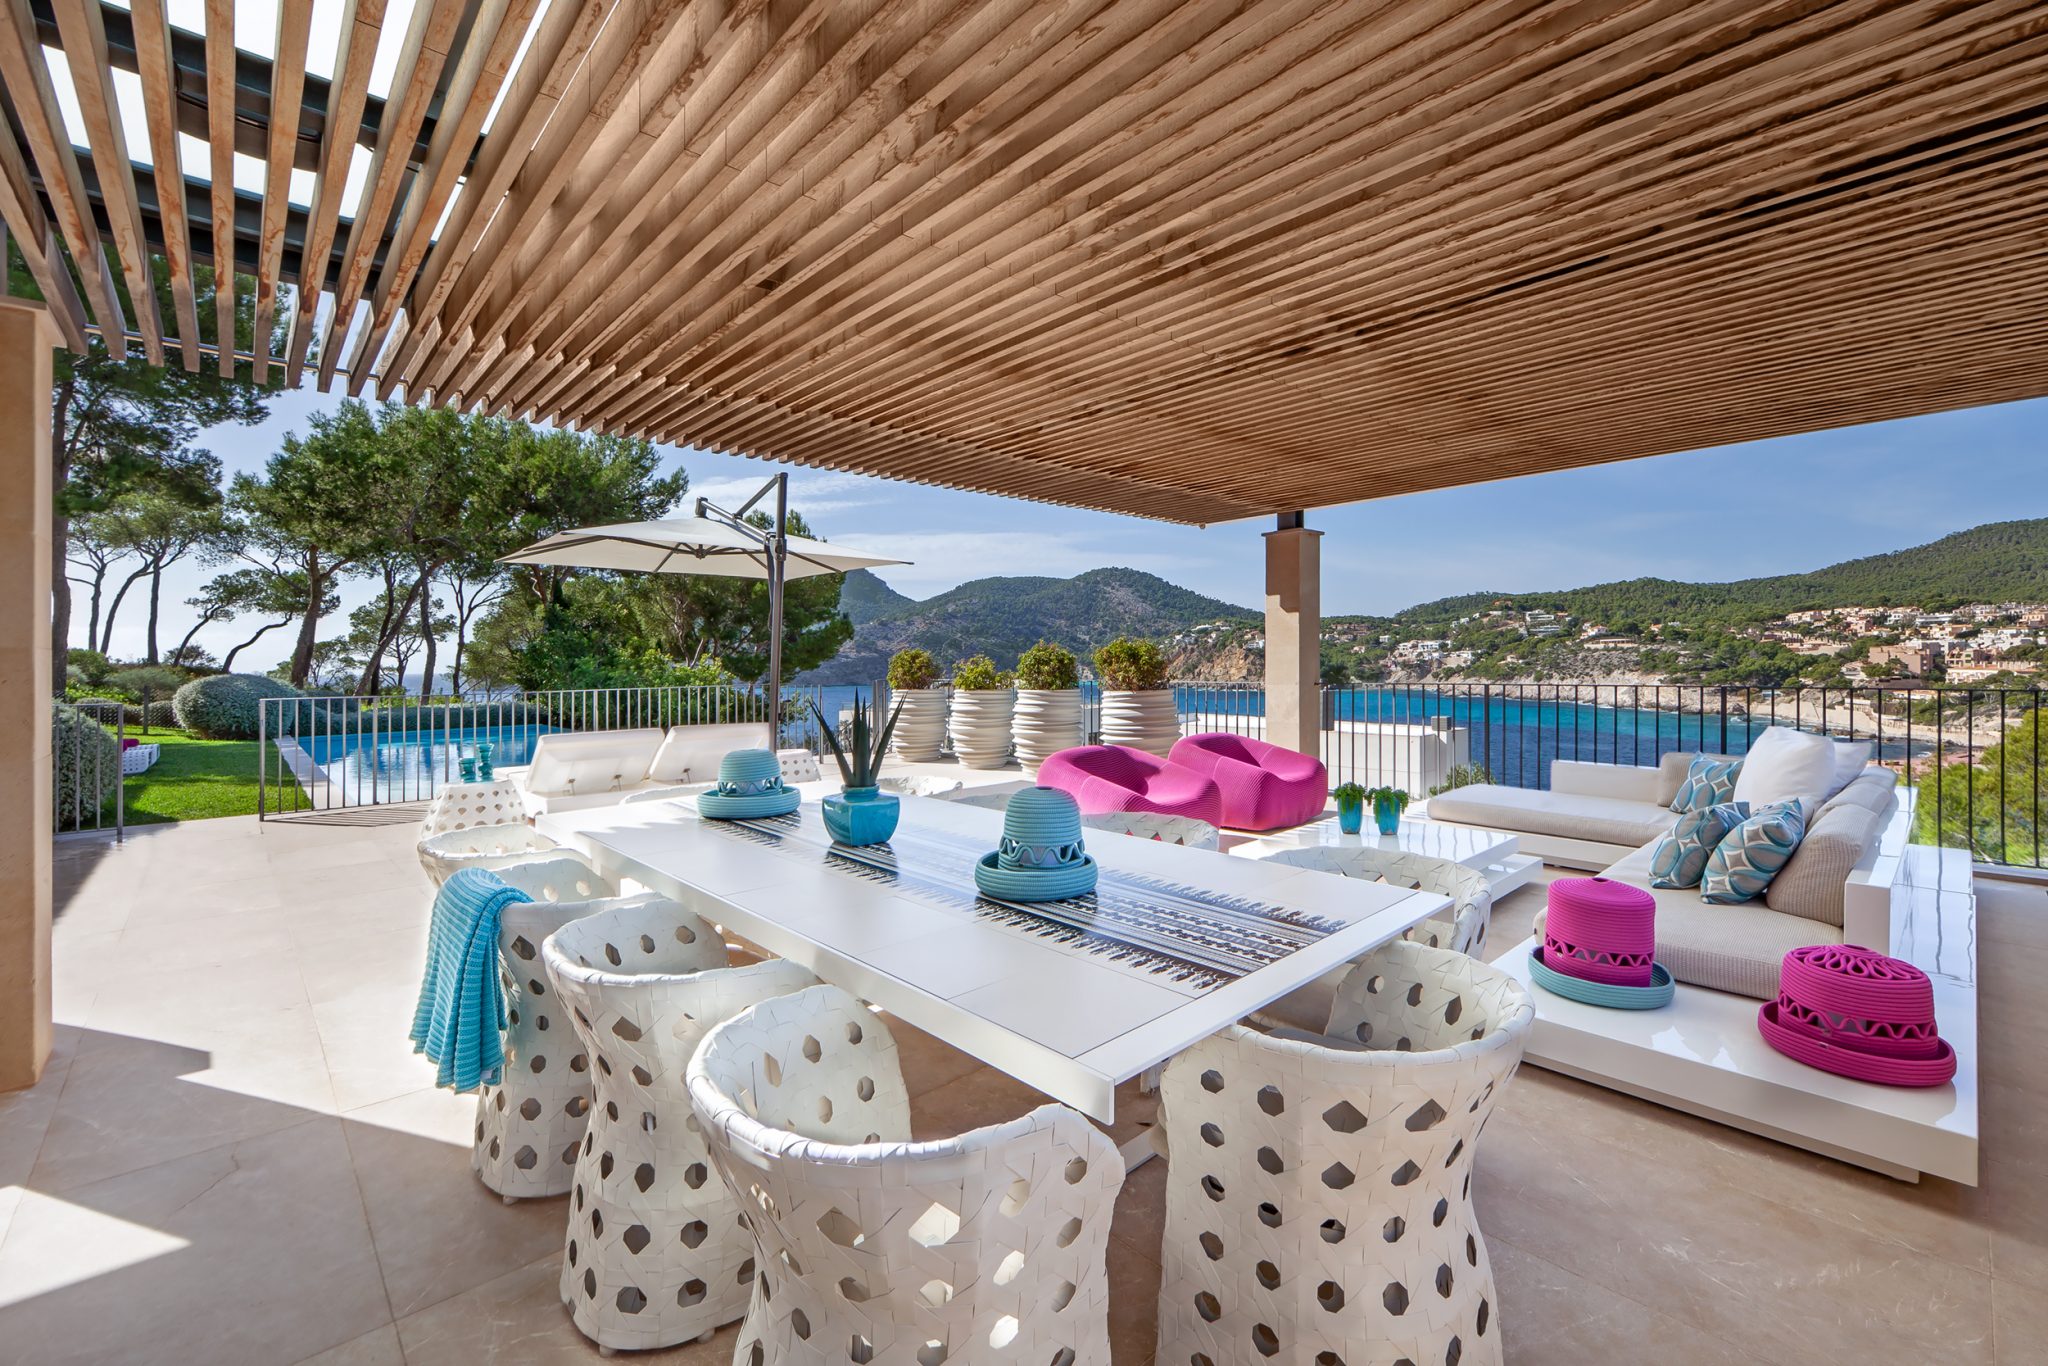 Camp de Mar: Repräsentatives Luxus-Anwesen mit herrlichem Meerblick